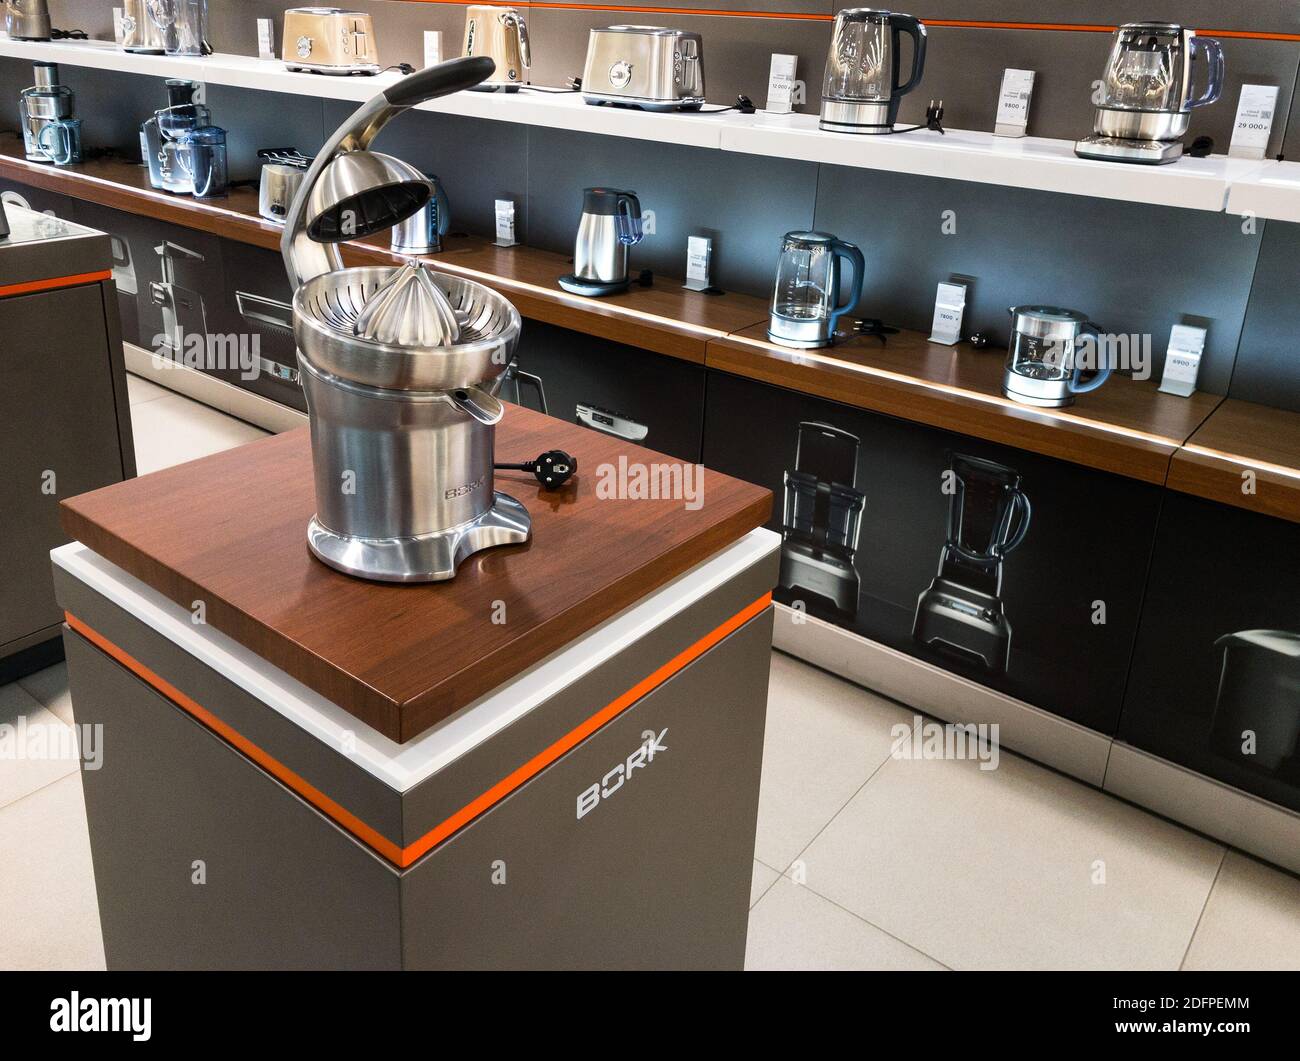 2020: Bork kitchen appliances in the store Stock Photo